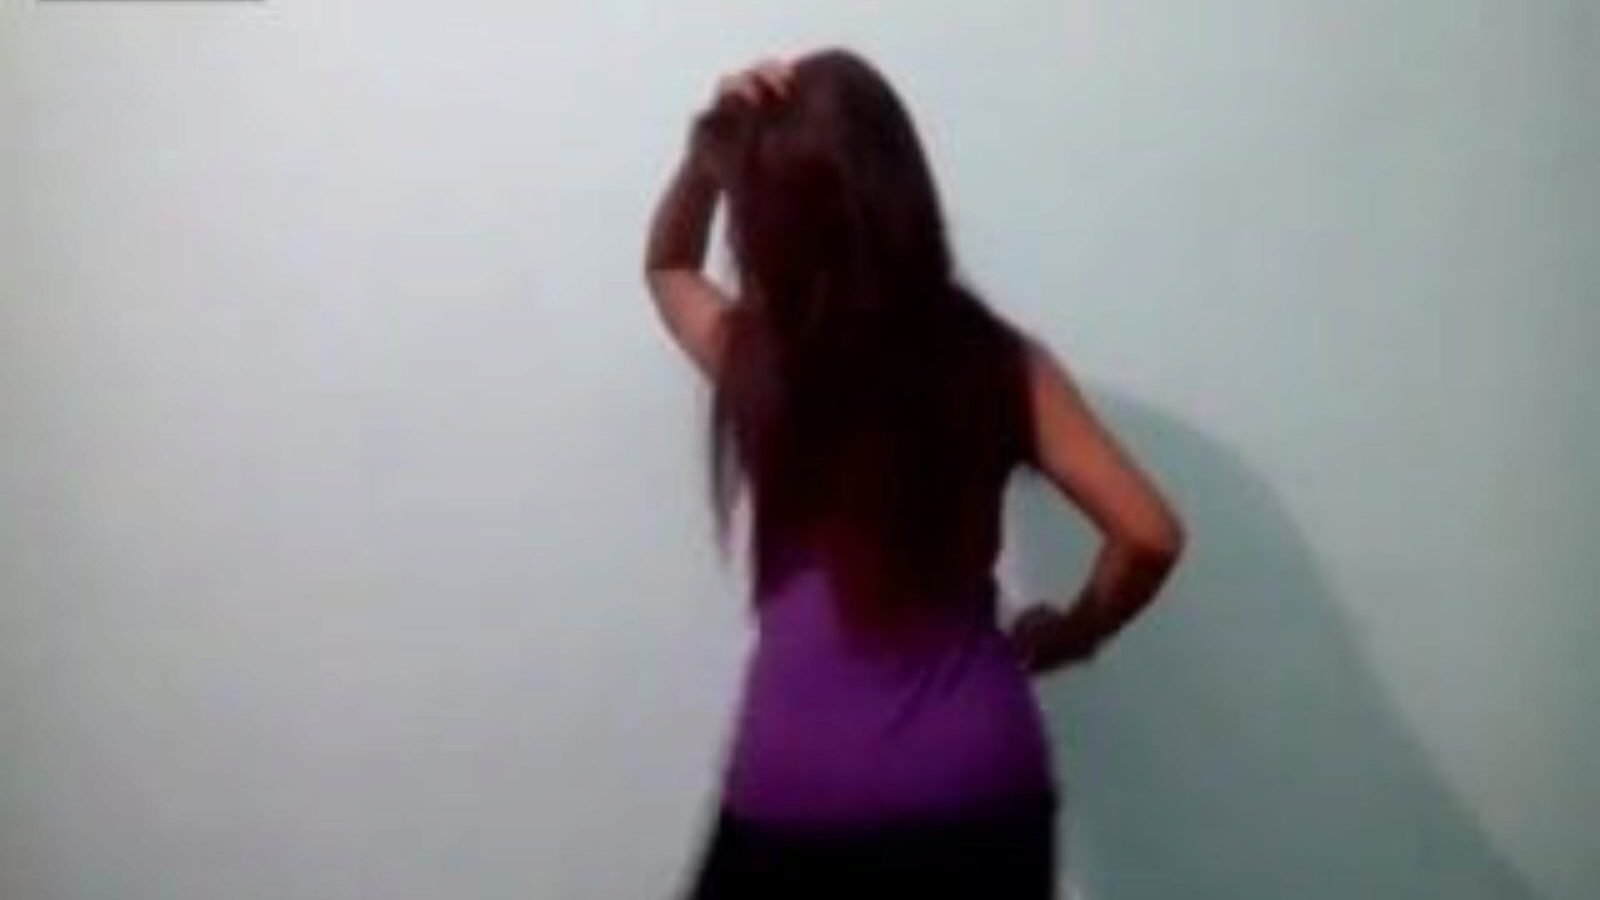 telugu lover andhra nude dance، free Indian porn video a4 watch telugu lover andhra nude dance video on xhamster ، موقع أنبوب fuck-a-thon الجيد الفائق مع أطنان من أبي أمريكي هندي مجاني ومقاطع إباحية مالايالامية